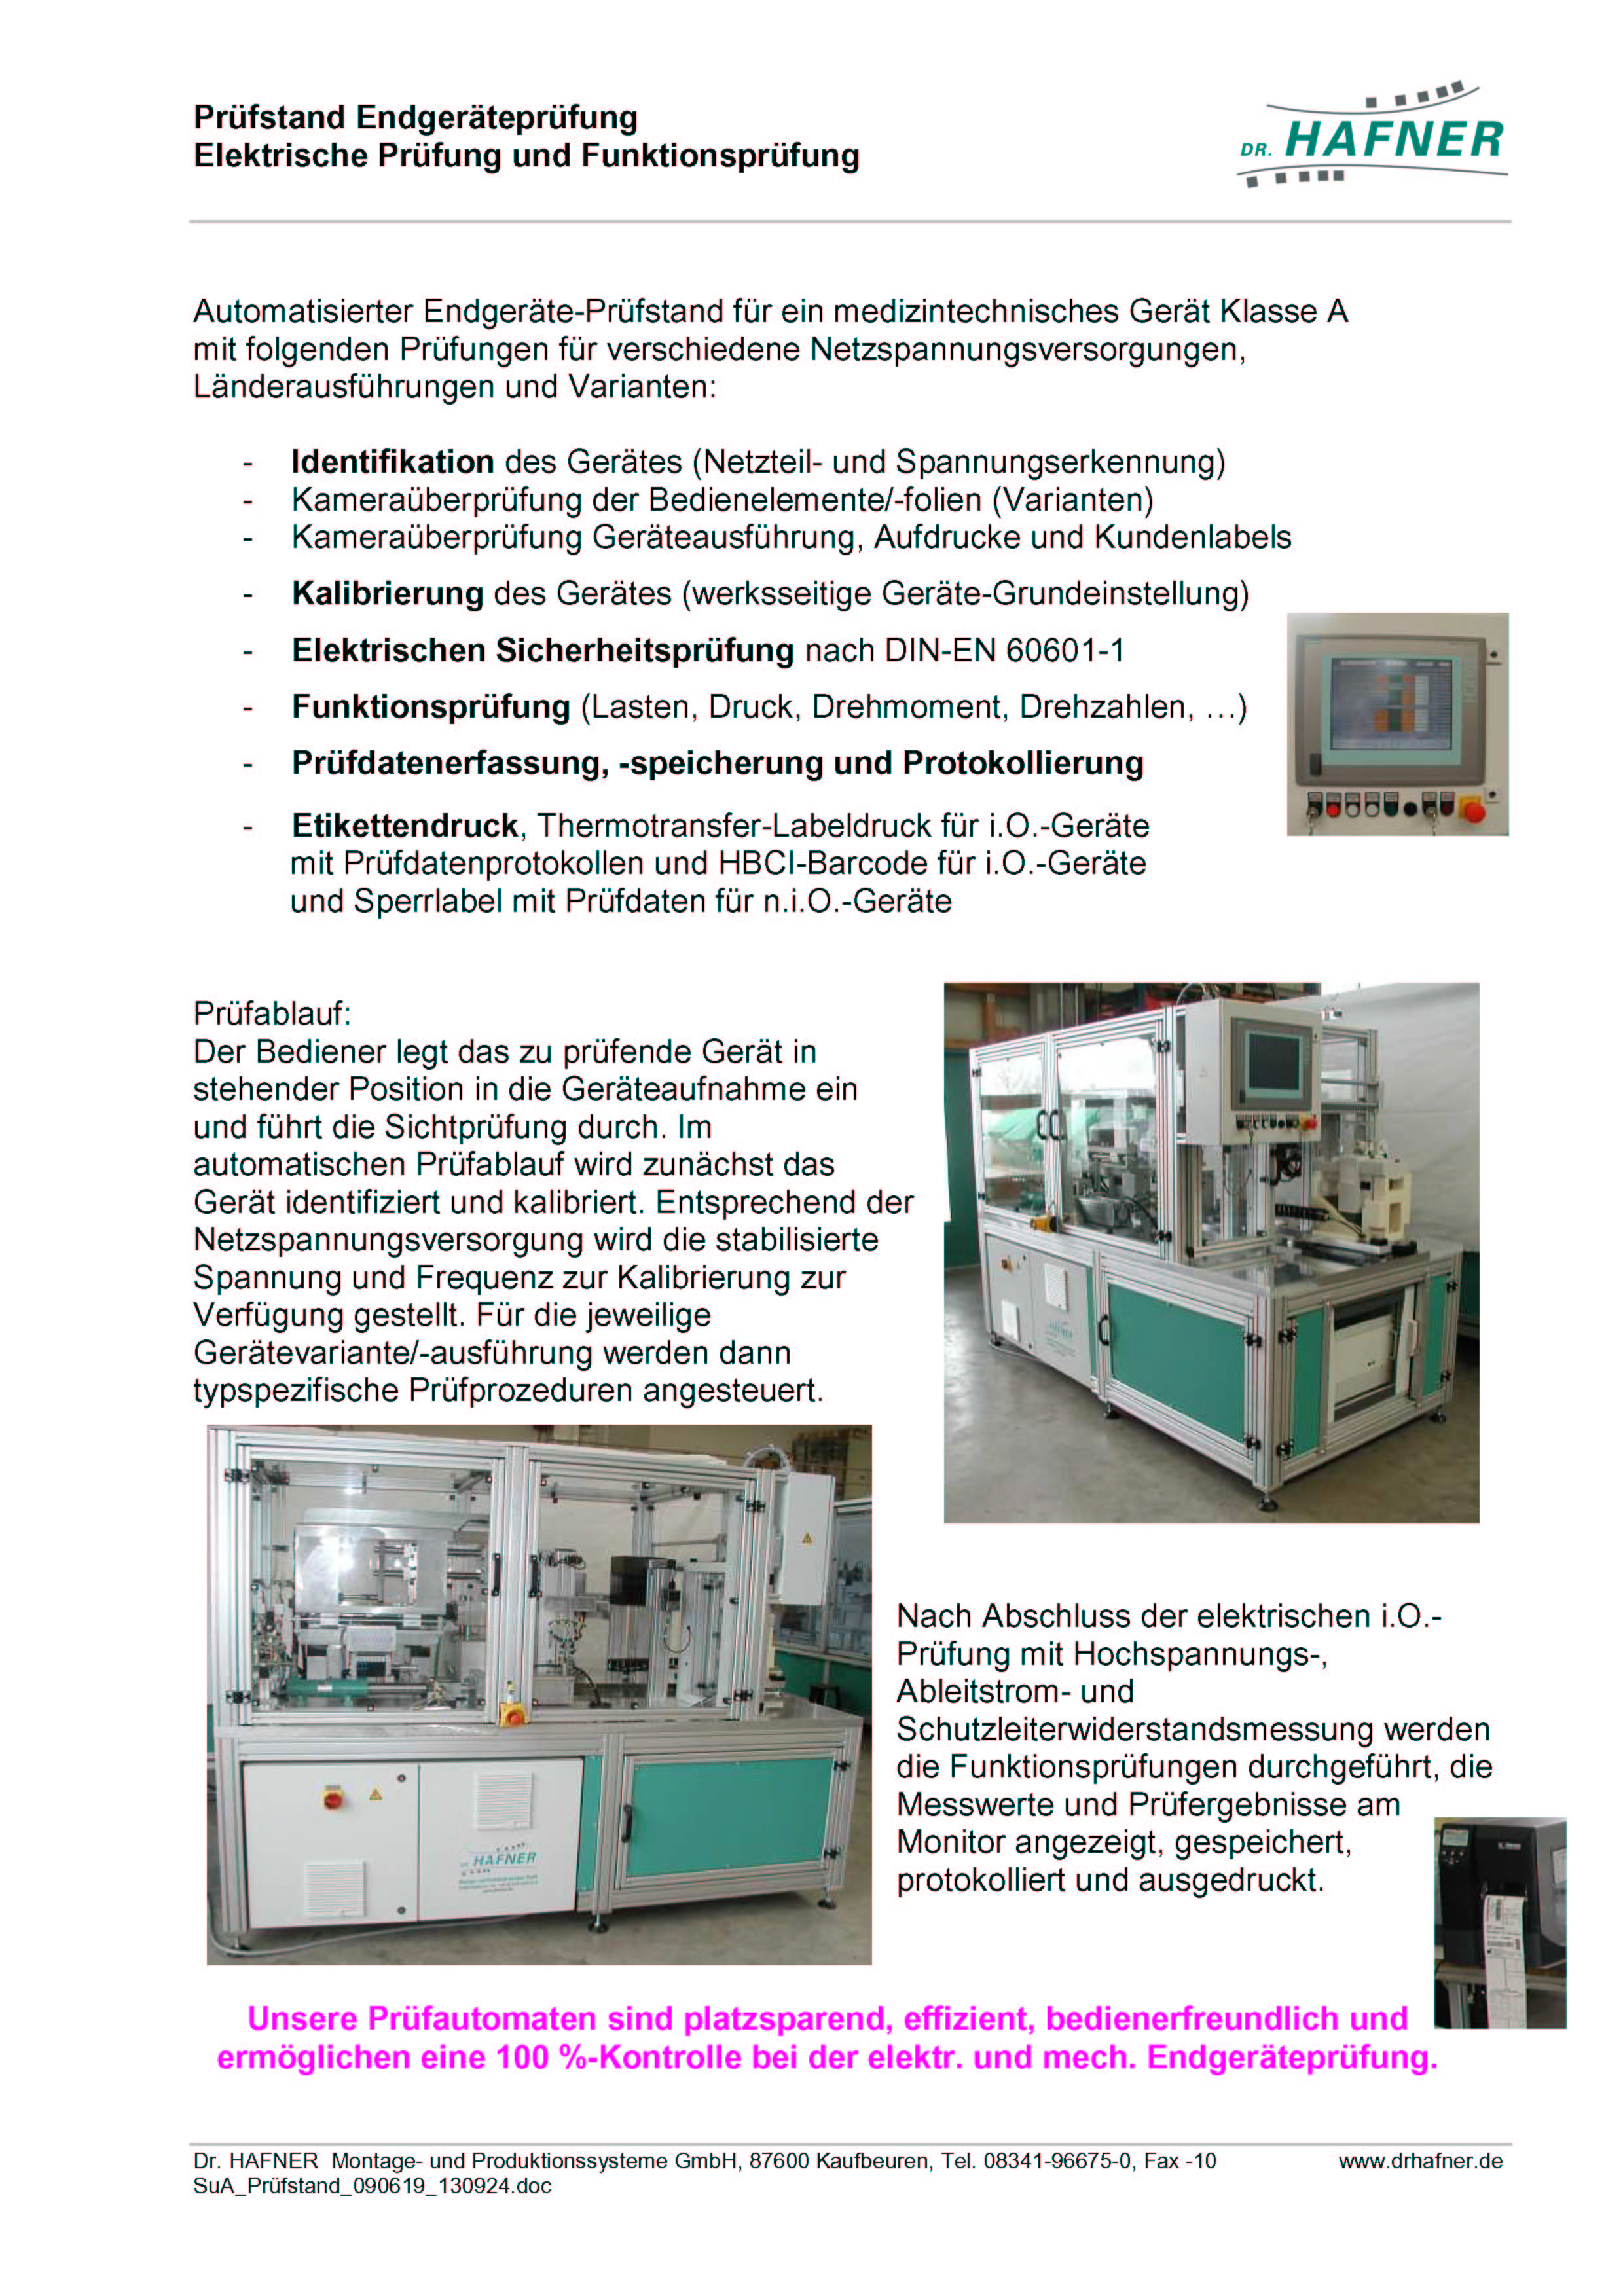 Dr. HAFNER_PKWP_64 Endgeräteprüfung Automat Elektrisch Funktion Label Medizintechnik